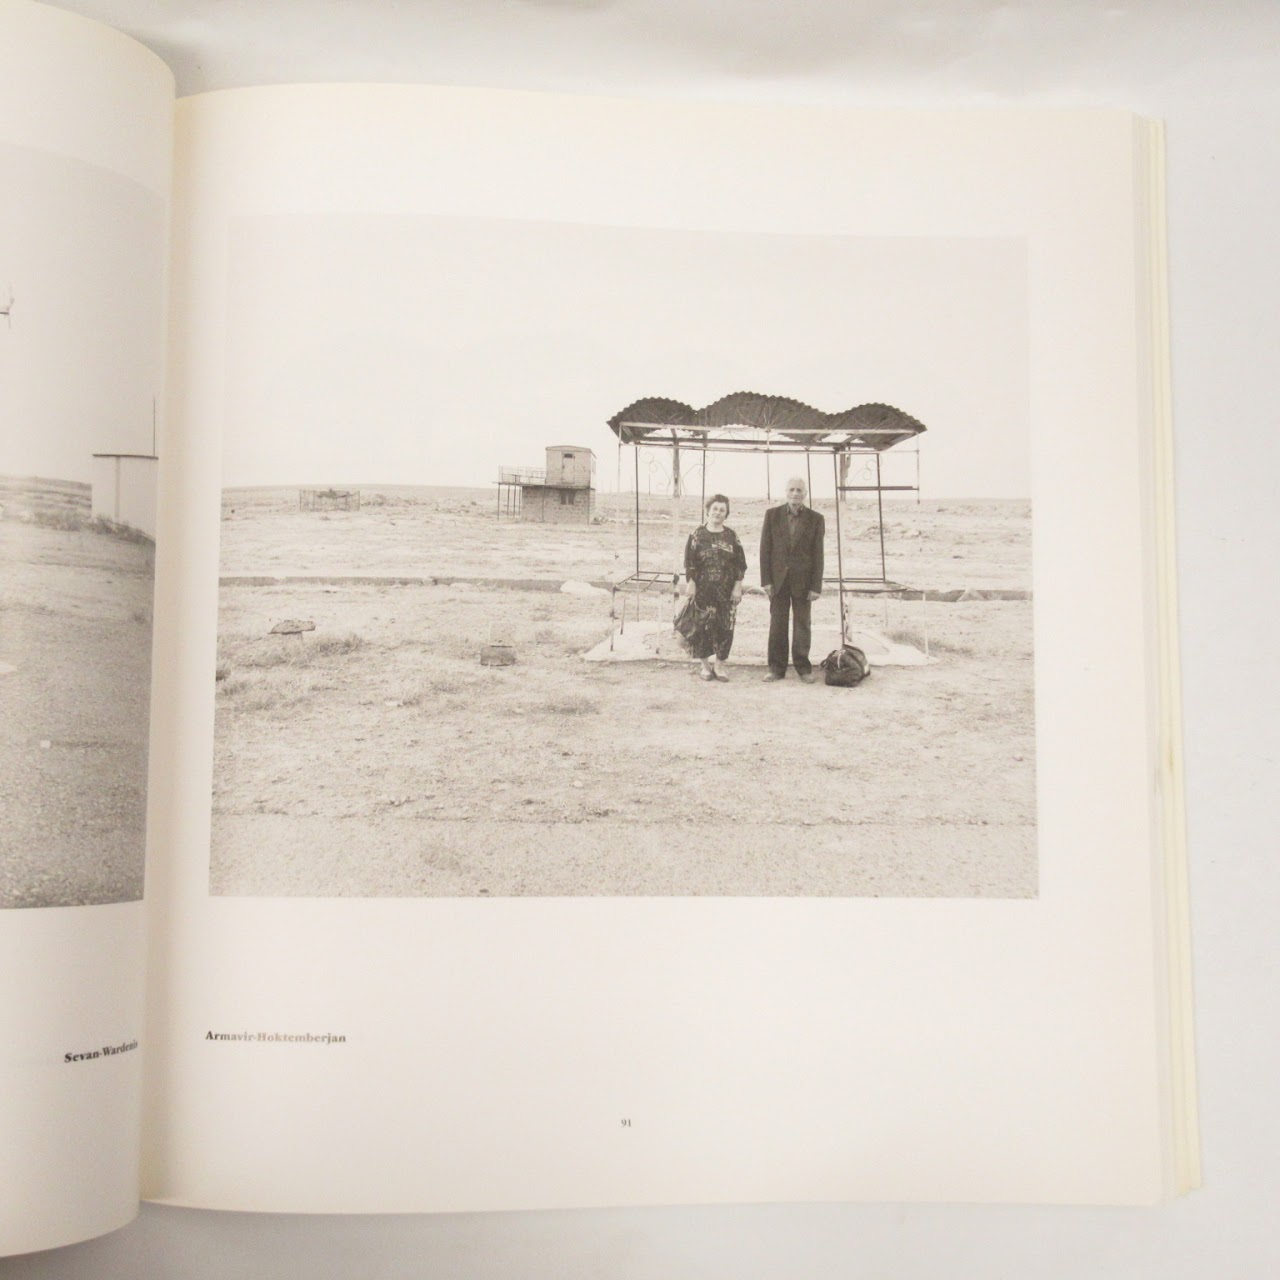 Ursula Schulz-Dornburg RARE 'Across the Territories' Photography Book